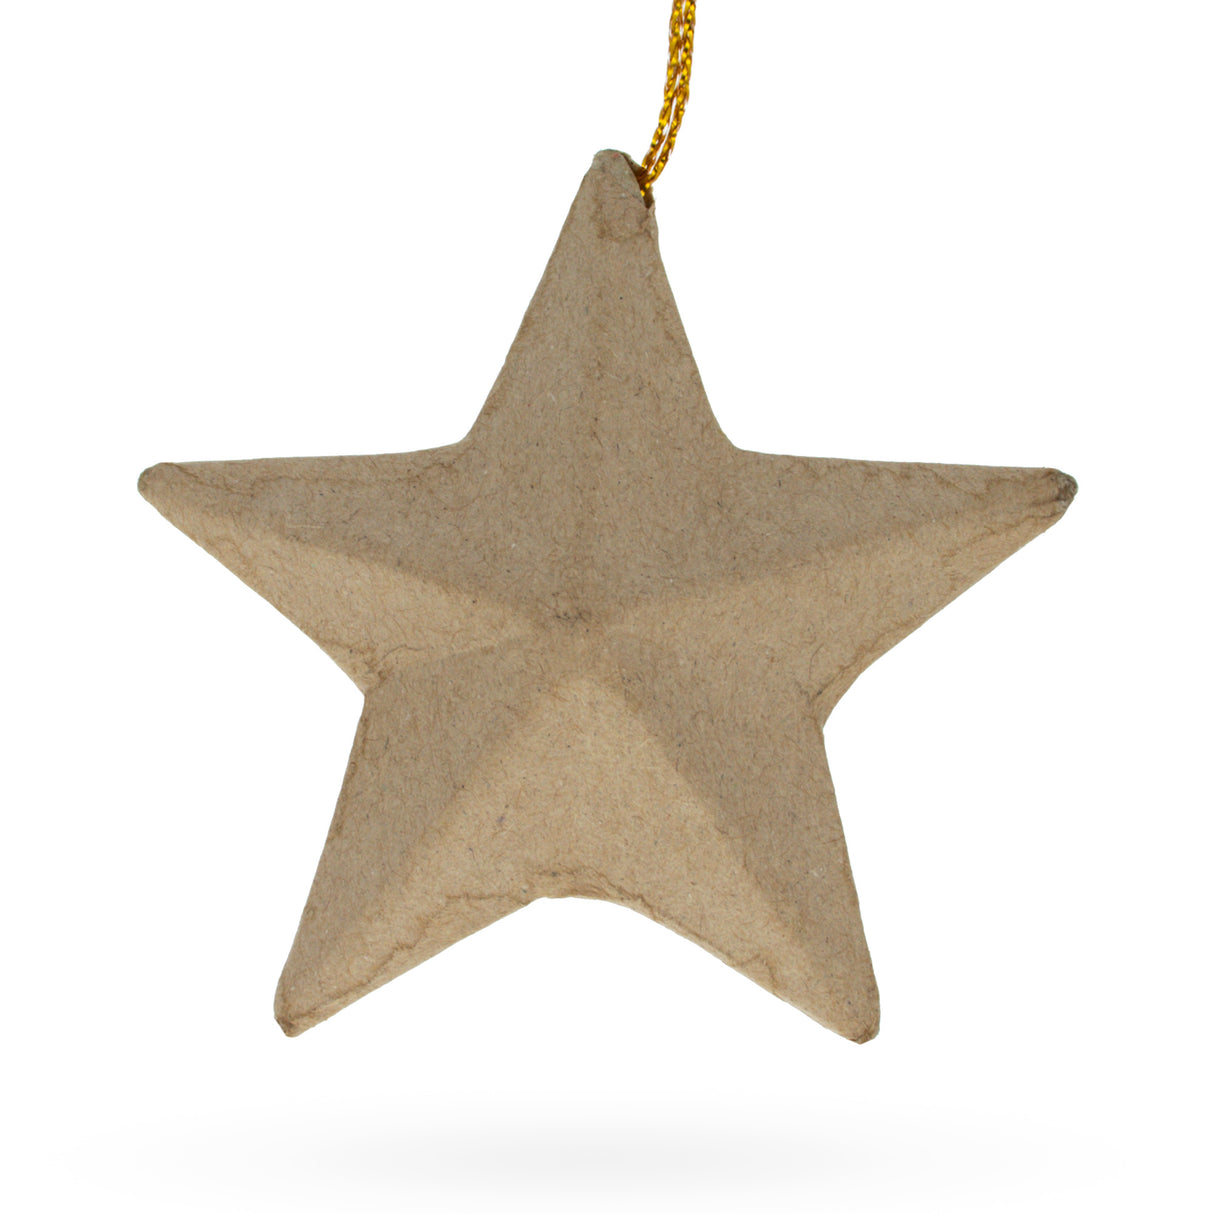 Star Paper Mache Ornament 3 Inches in Beige color, Star shape